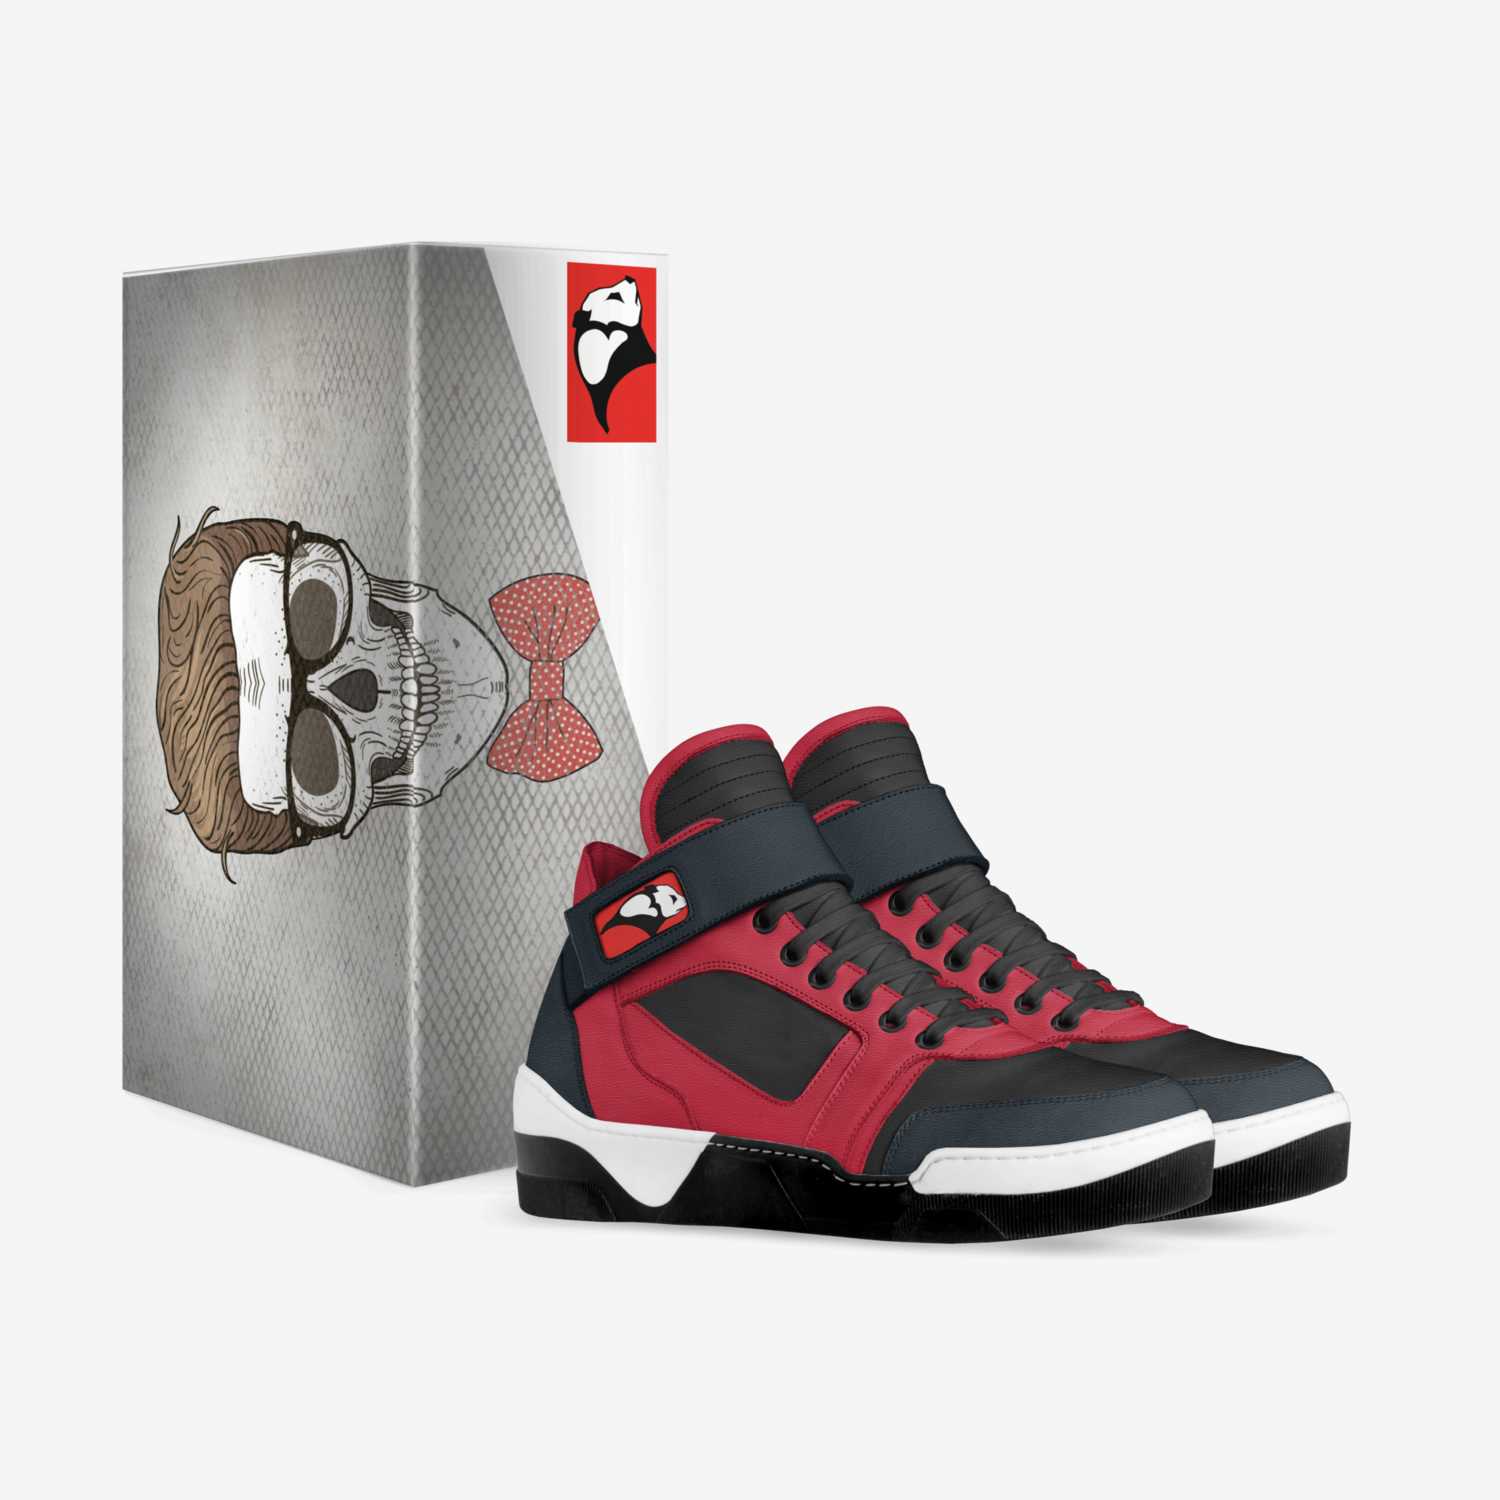 KS BoostX2 custom made in Italy shoes by Krish Sanklecha | Box view